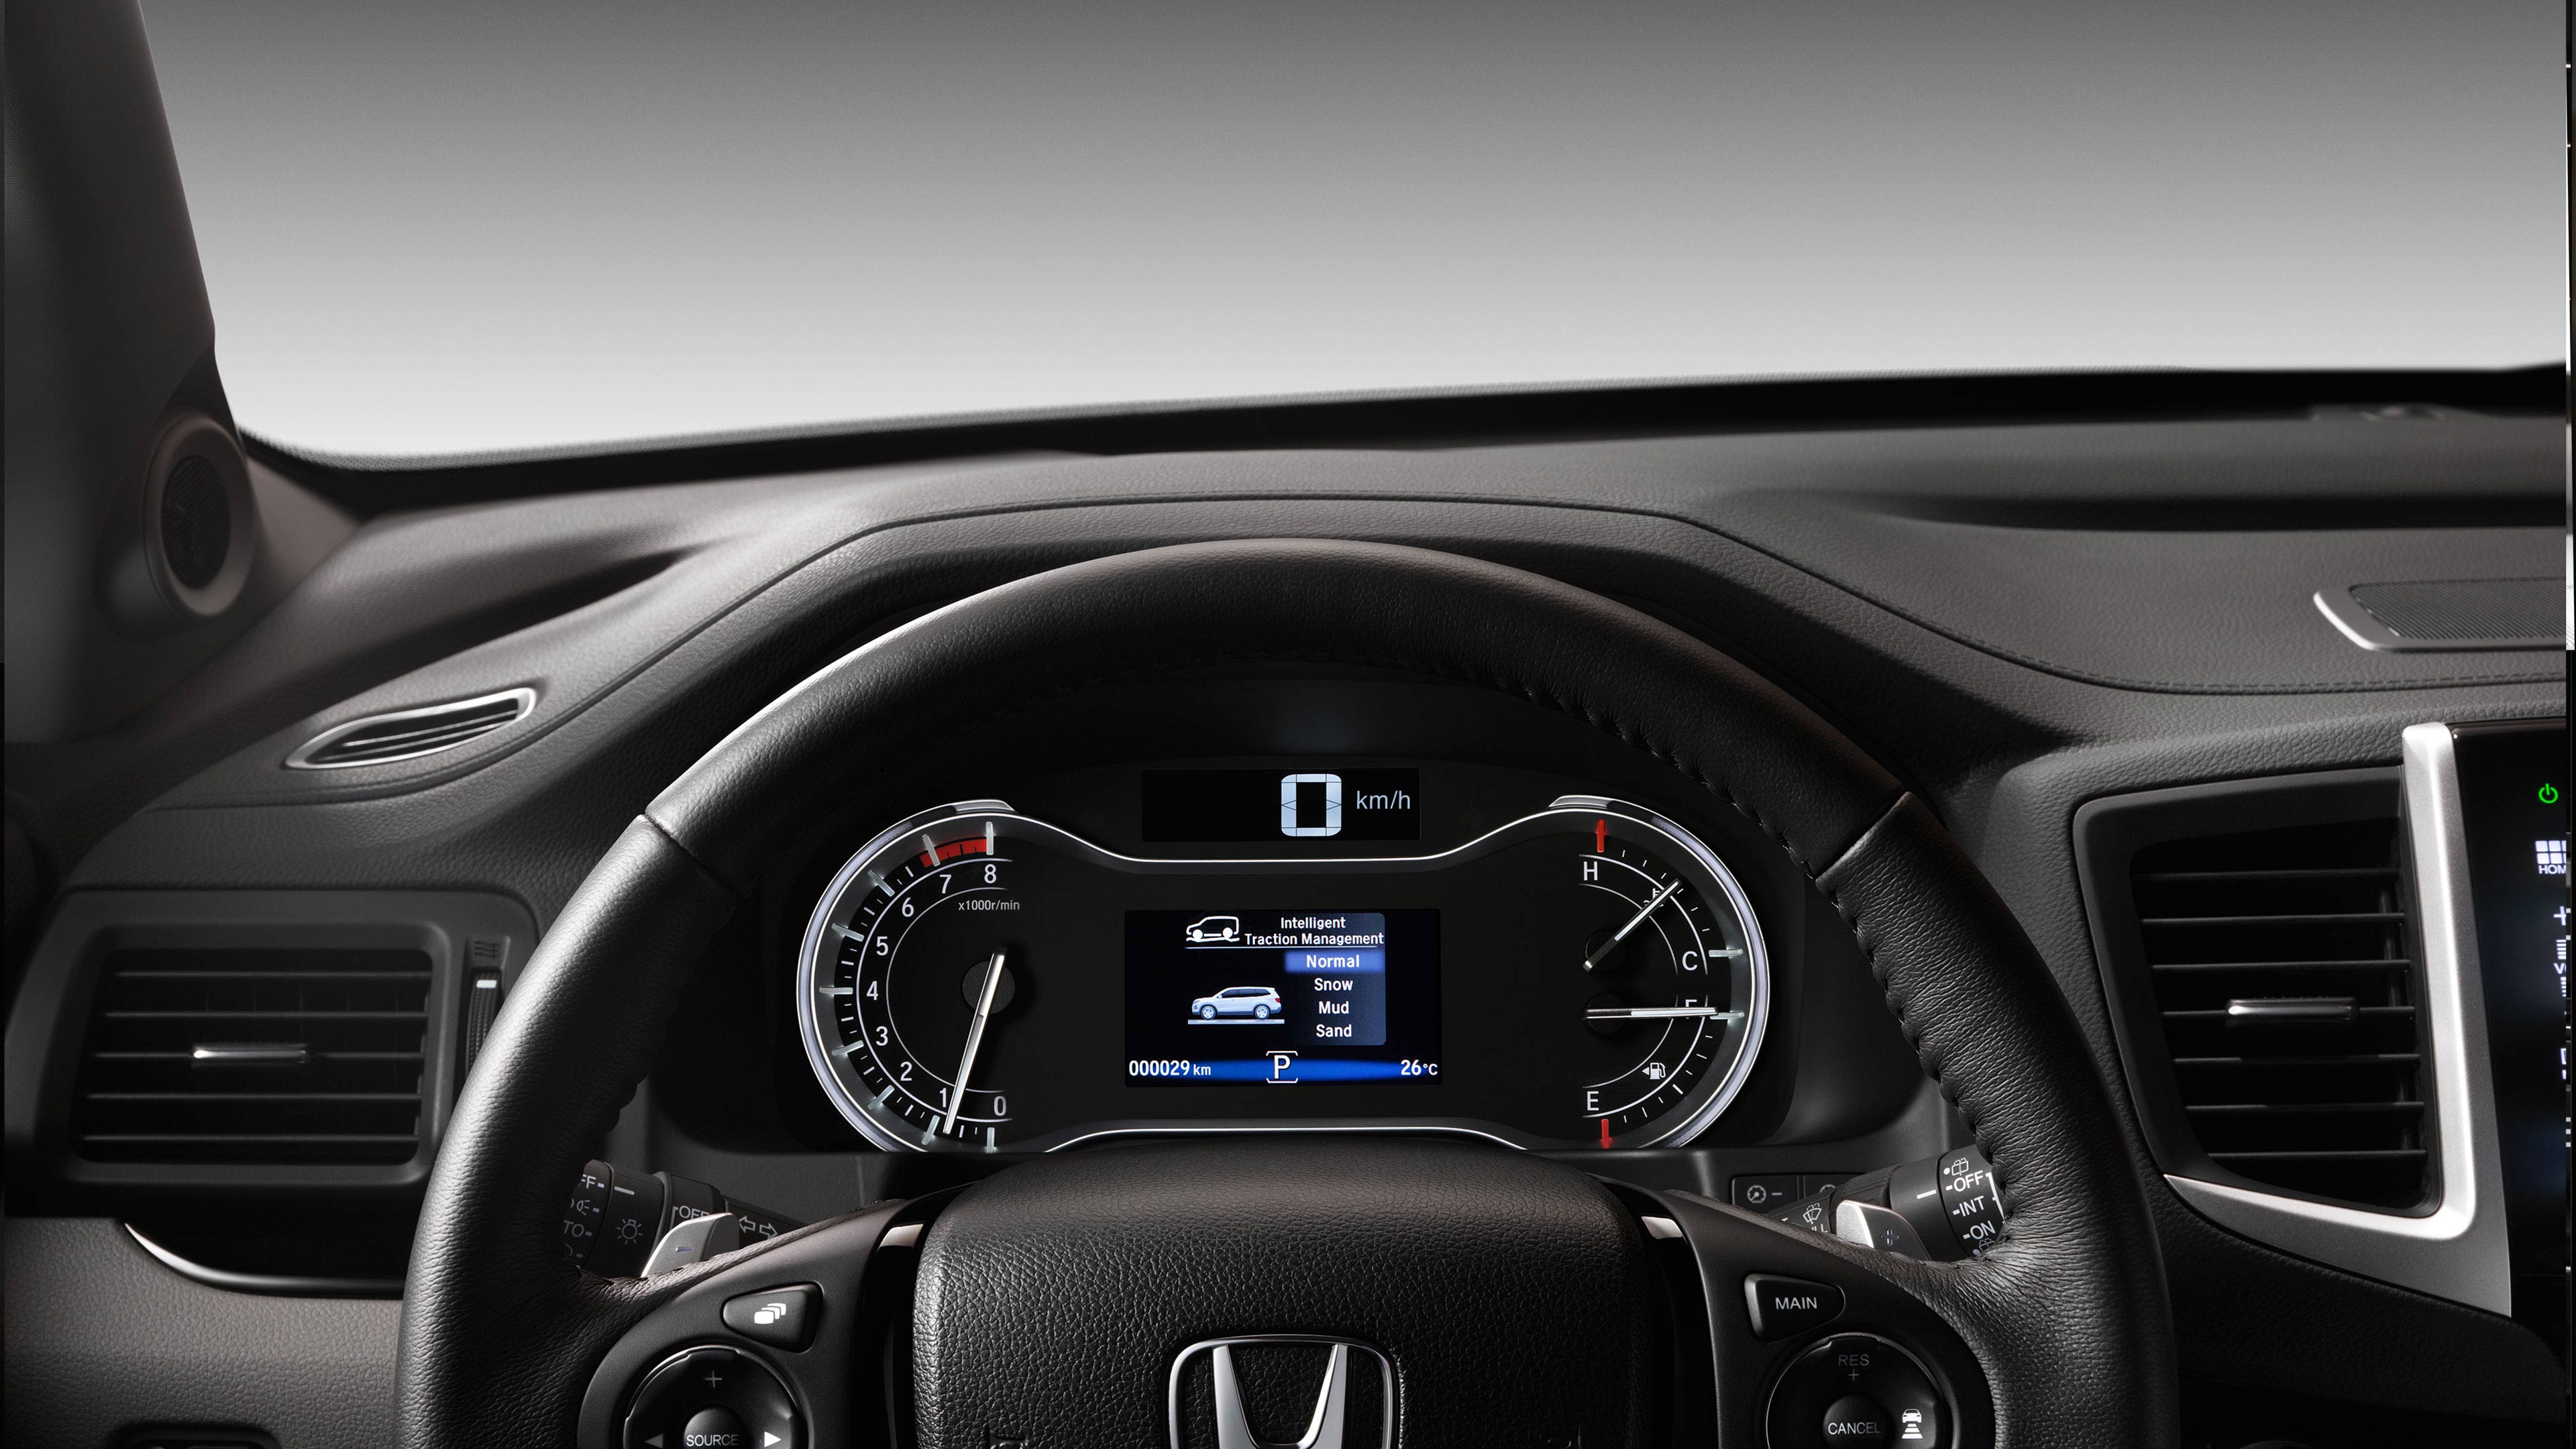 Honda Pilot Ex interior front Dashboard view